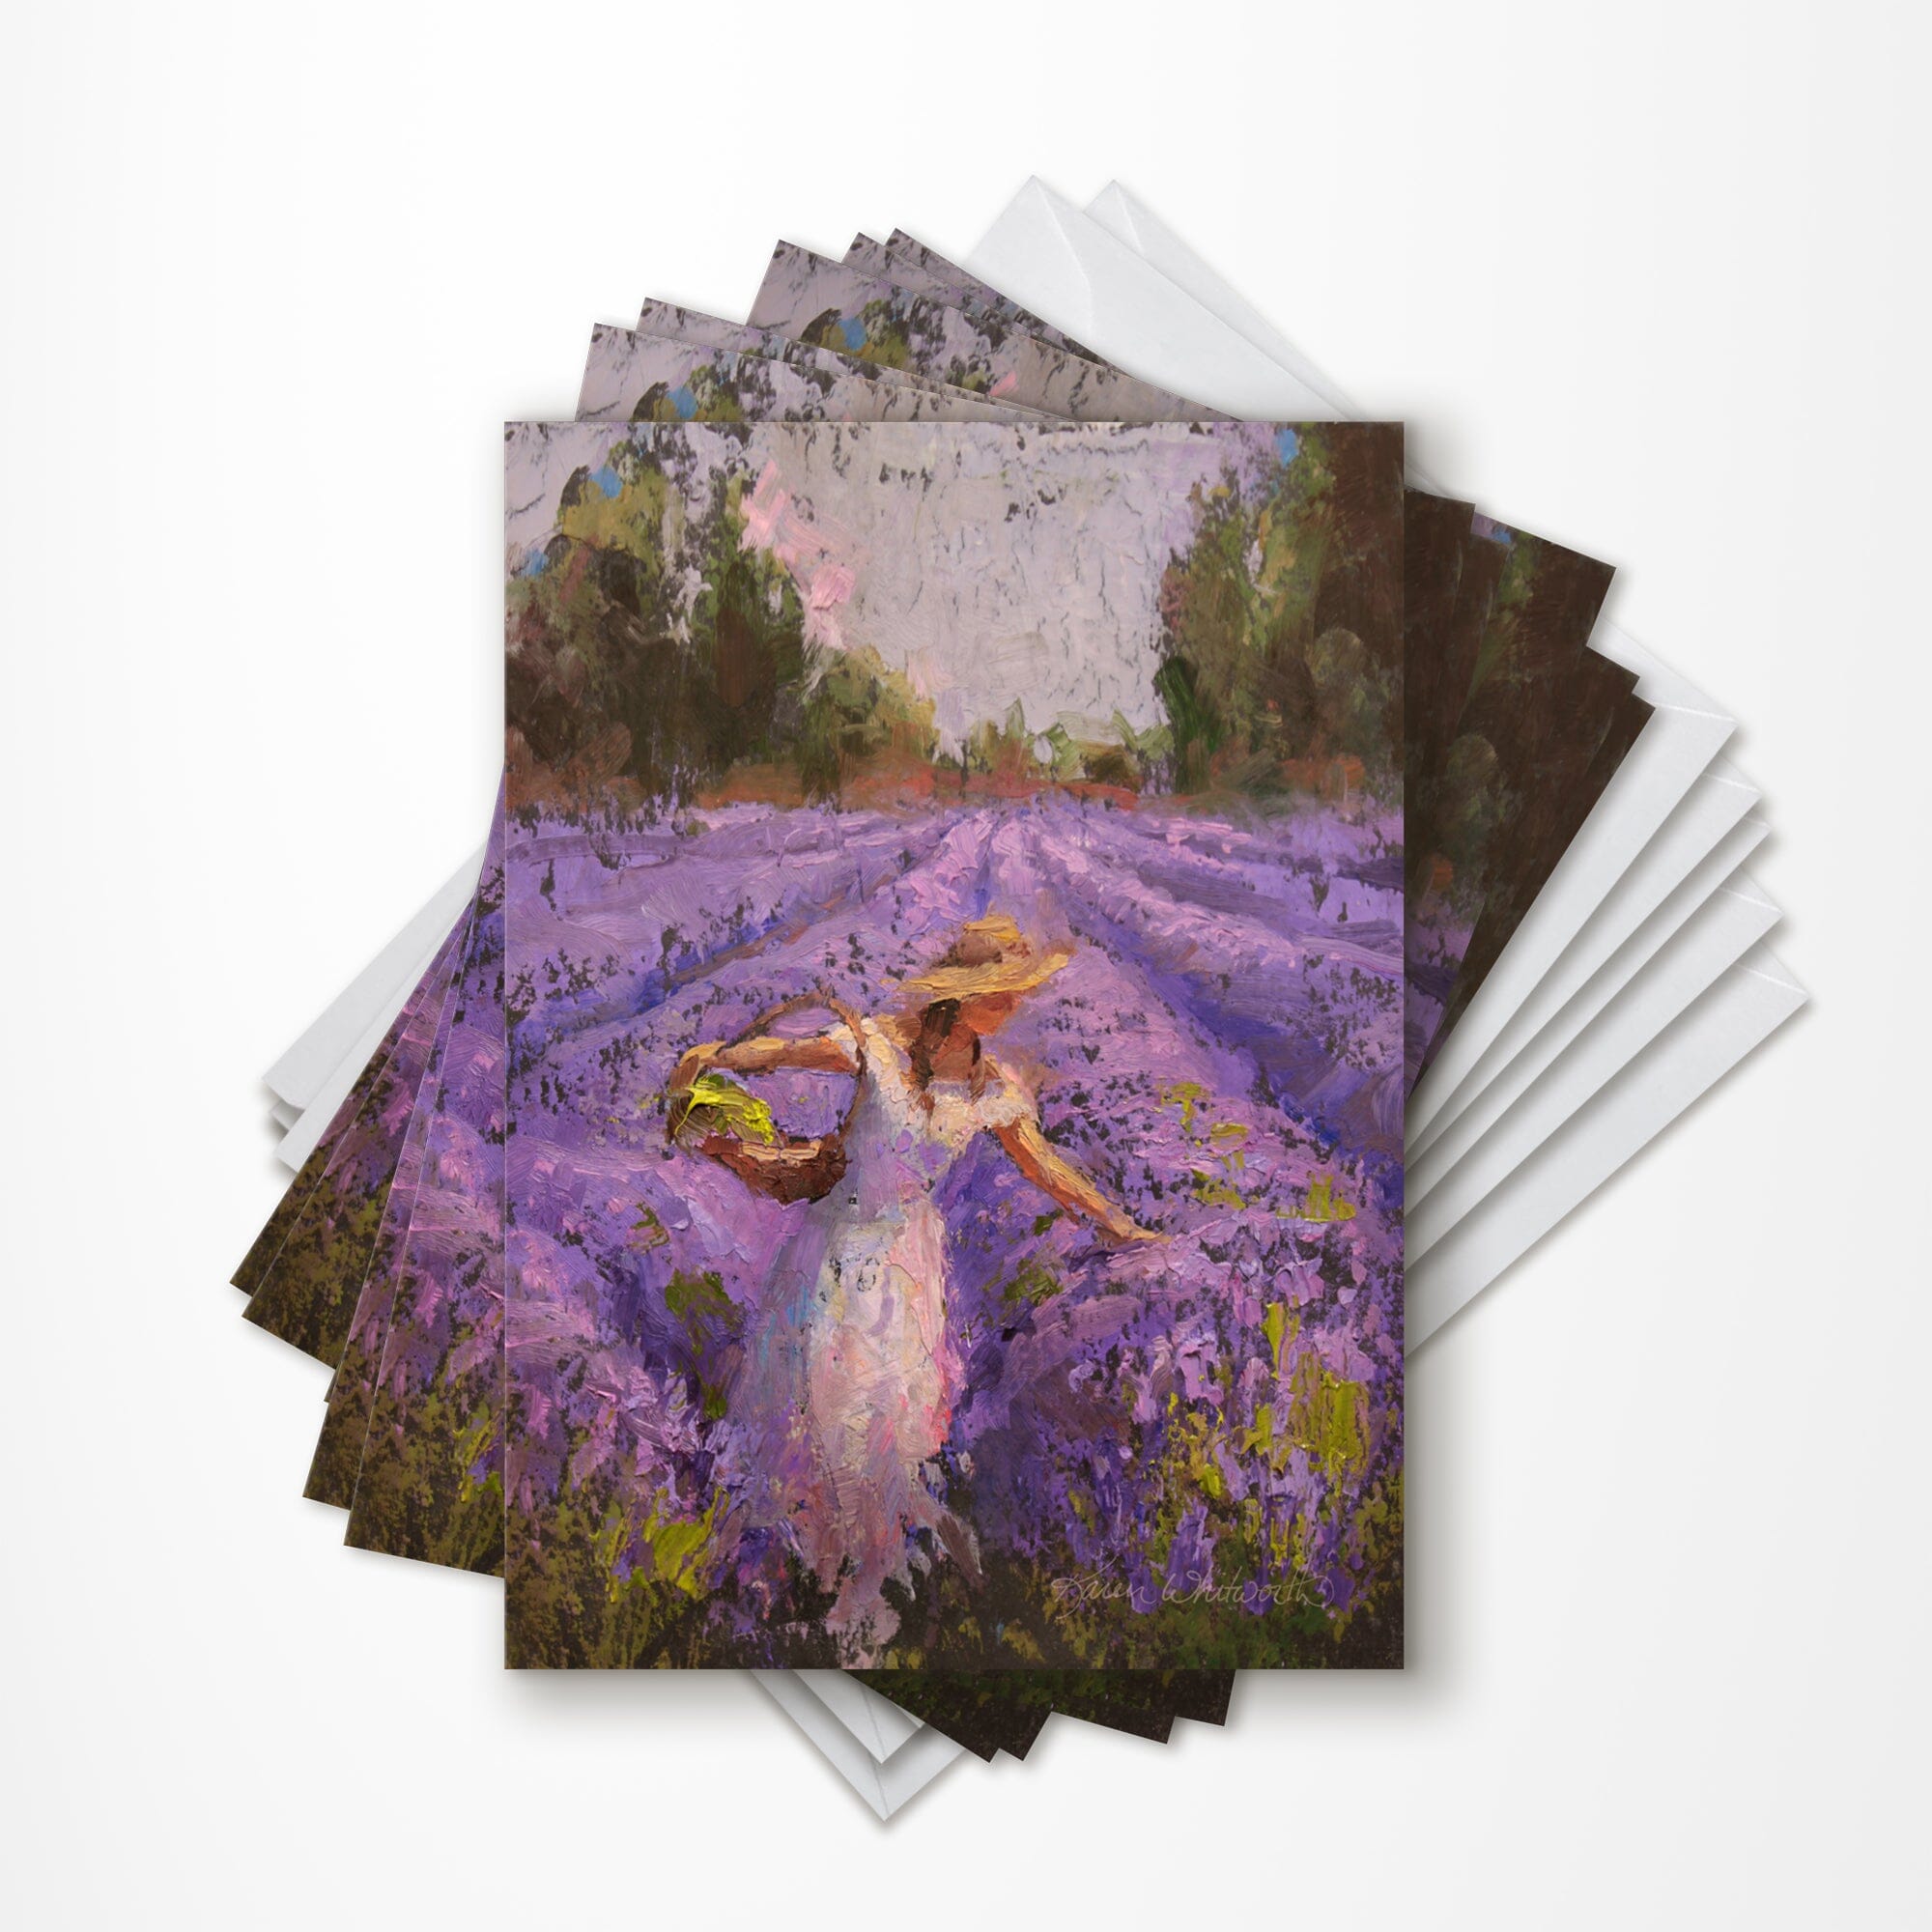 A set of 6 lavender greeting cards resting on white envelopes